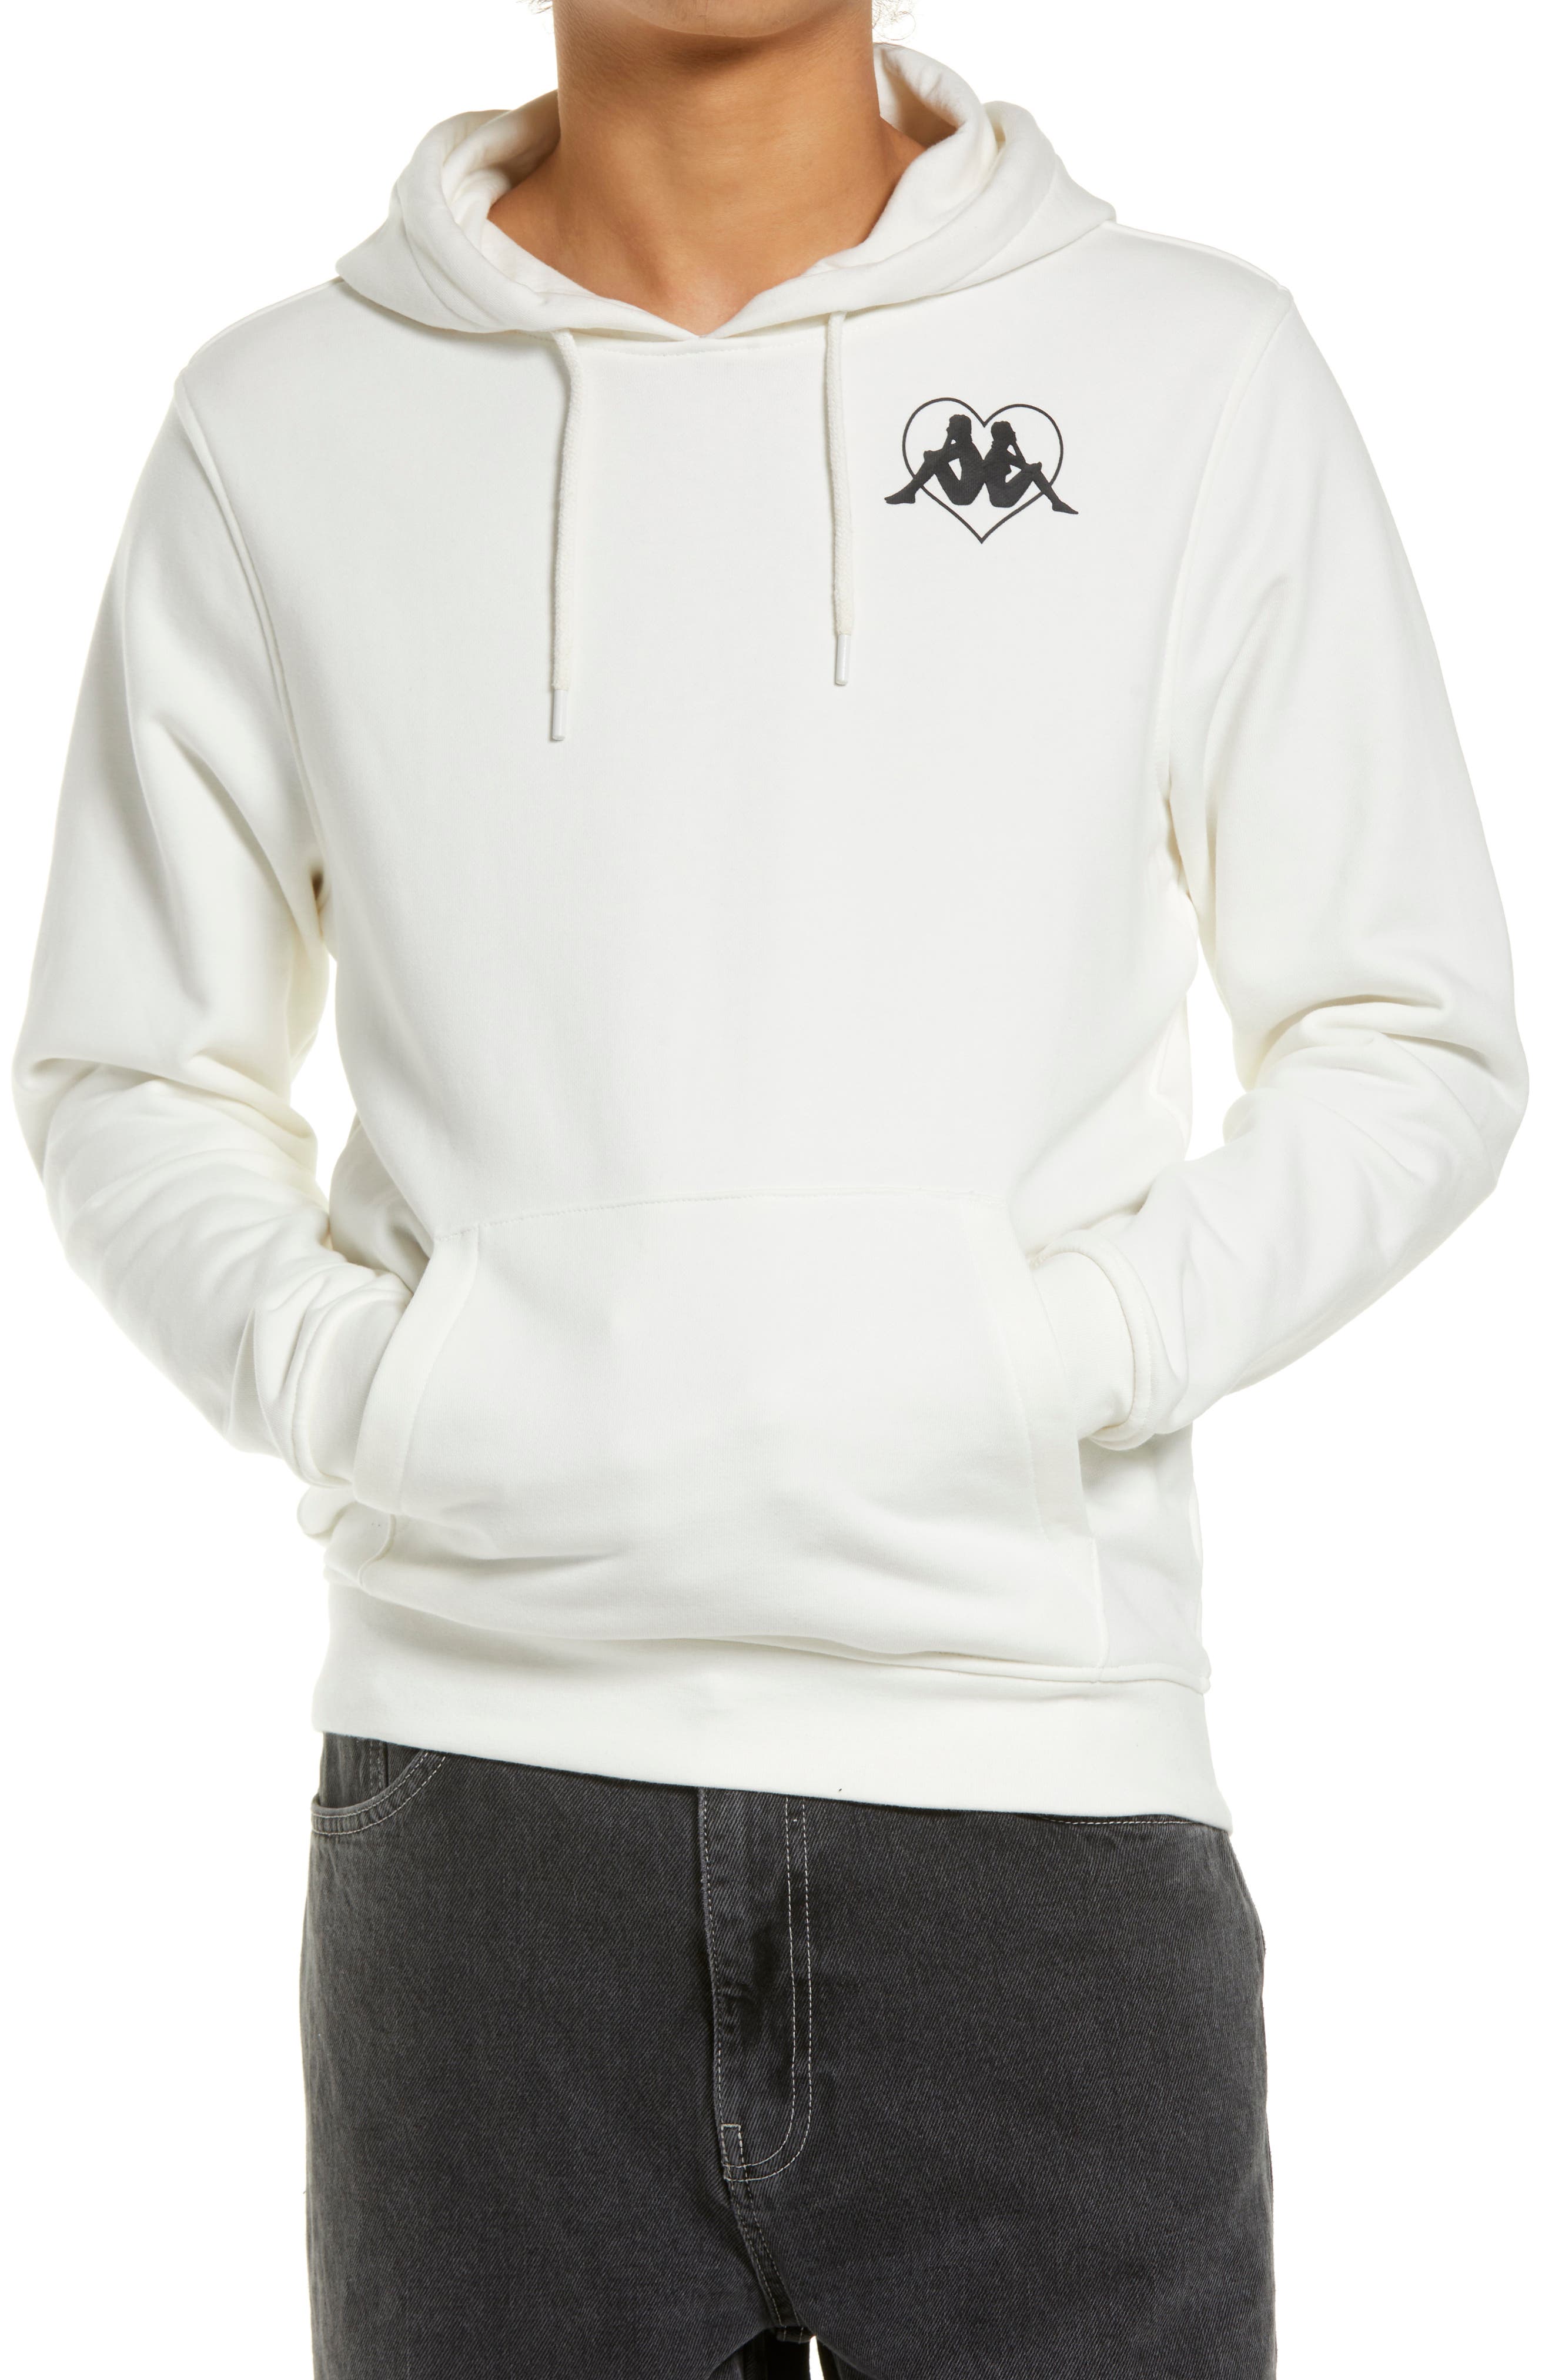 Kappa Men's Authentic Love Torun Logo Hoodie in Bright White-Black Smoke at Nordstrom, Size Small